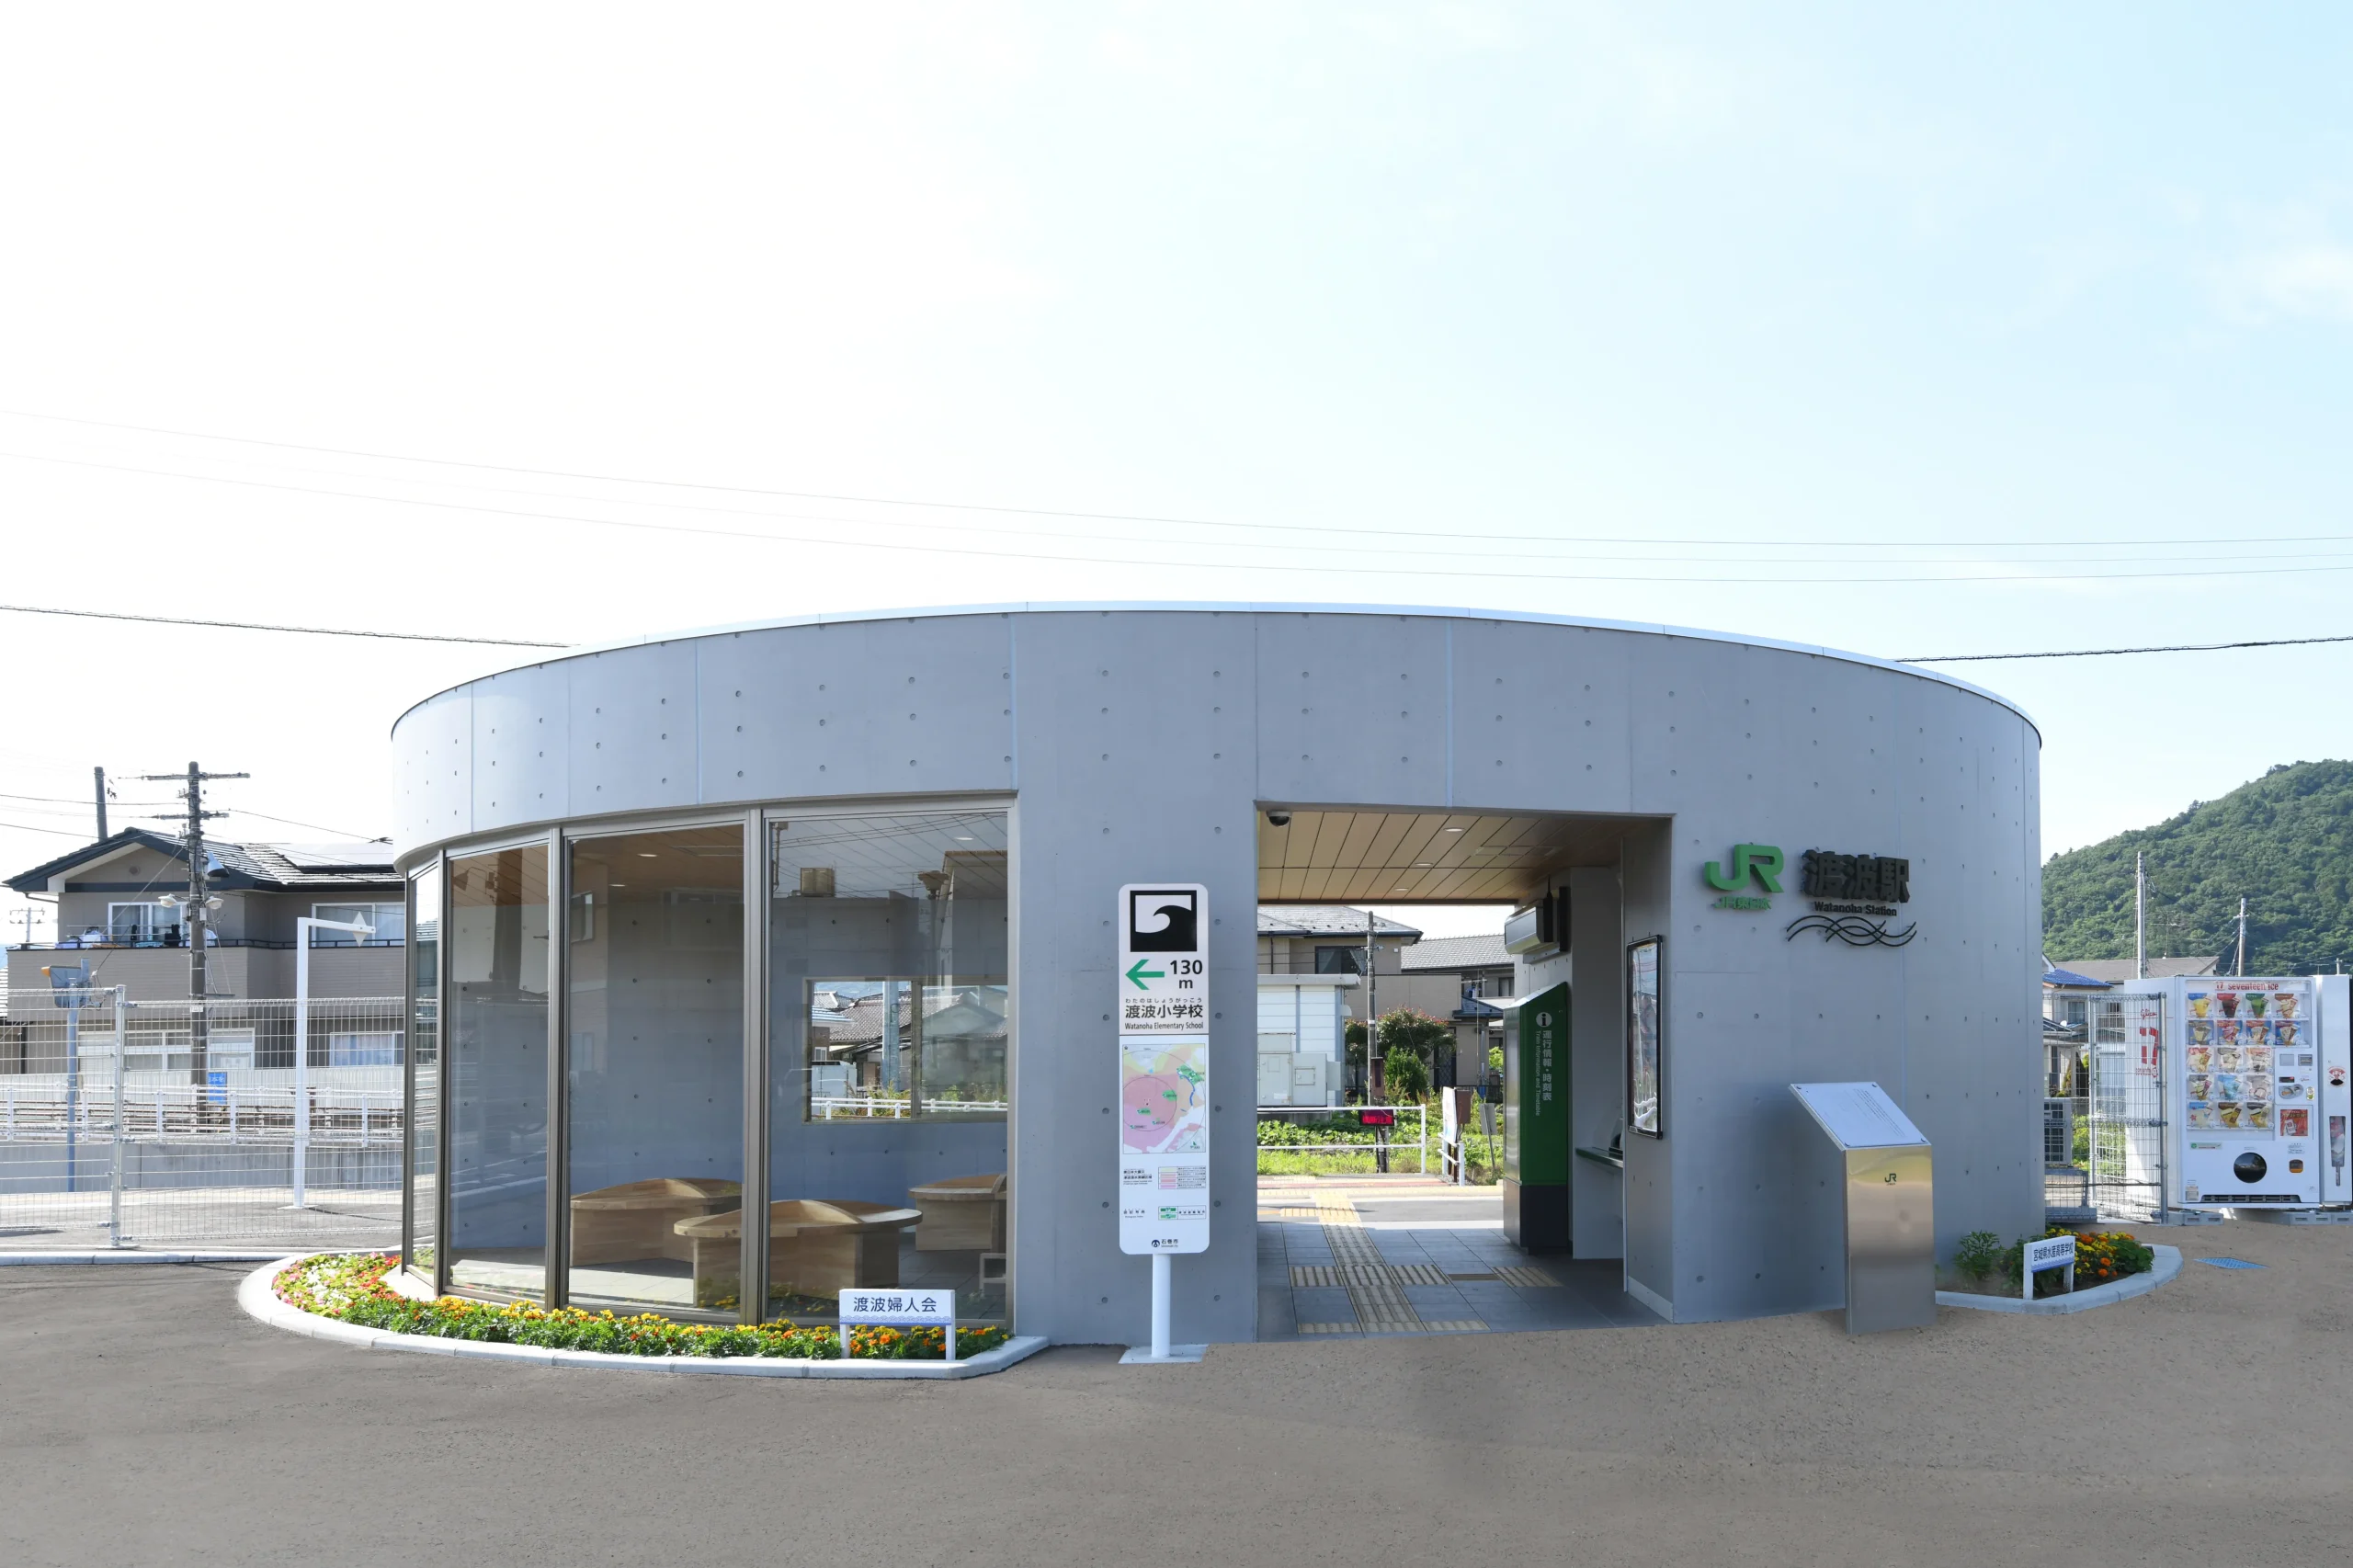 JR石巻線 渡波駅本屋新築その他工事のサムネイル画像です